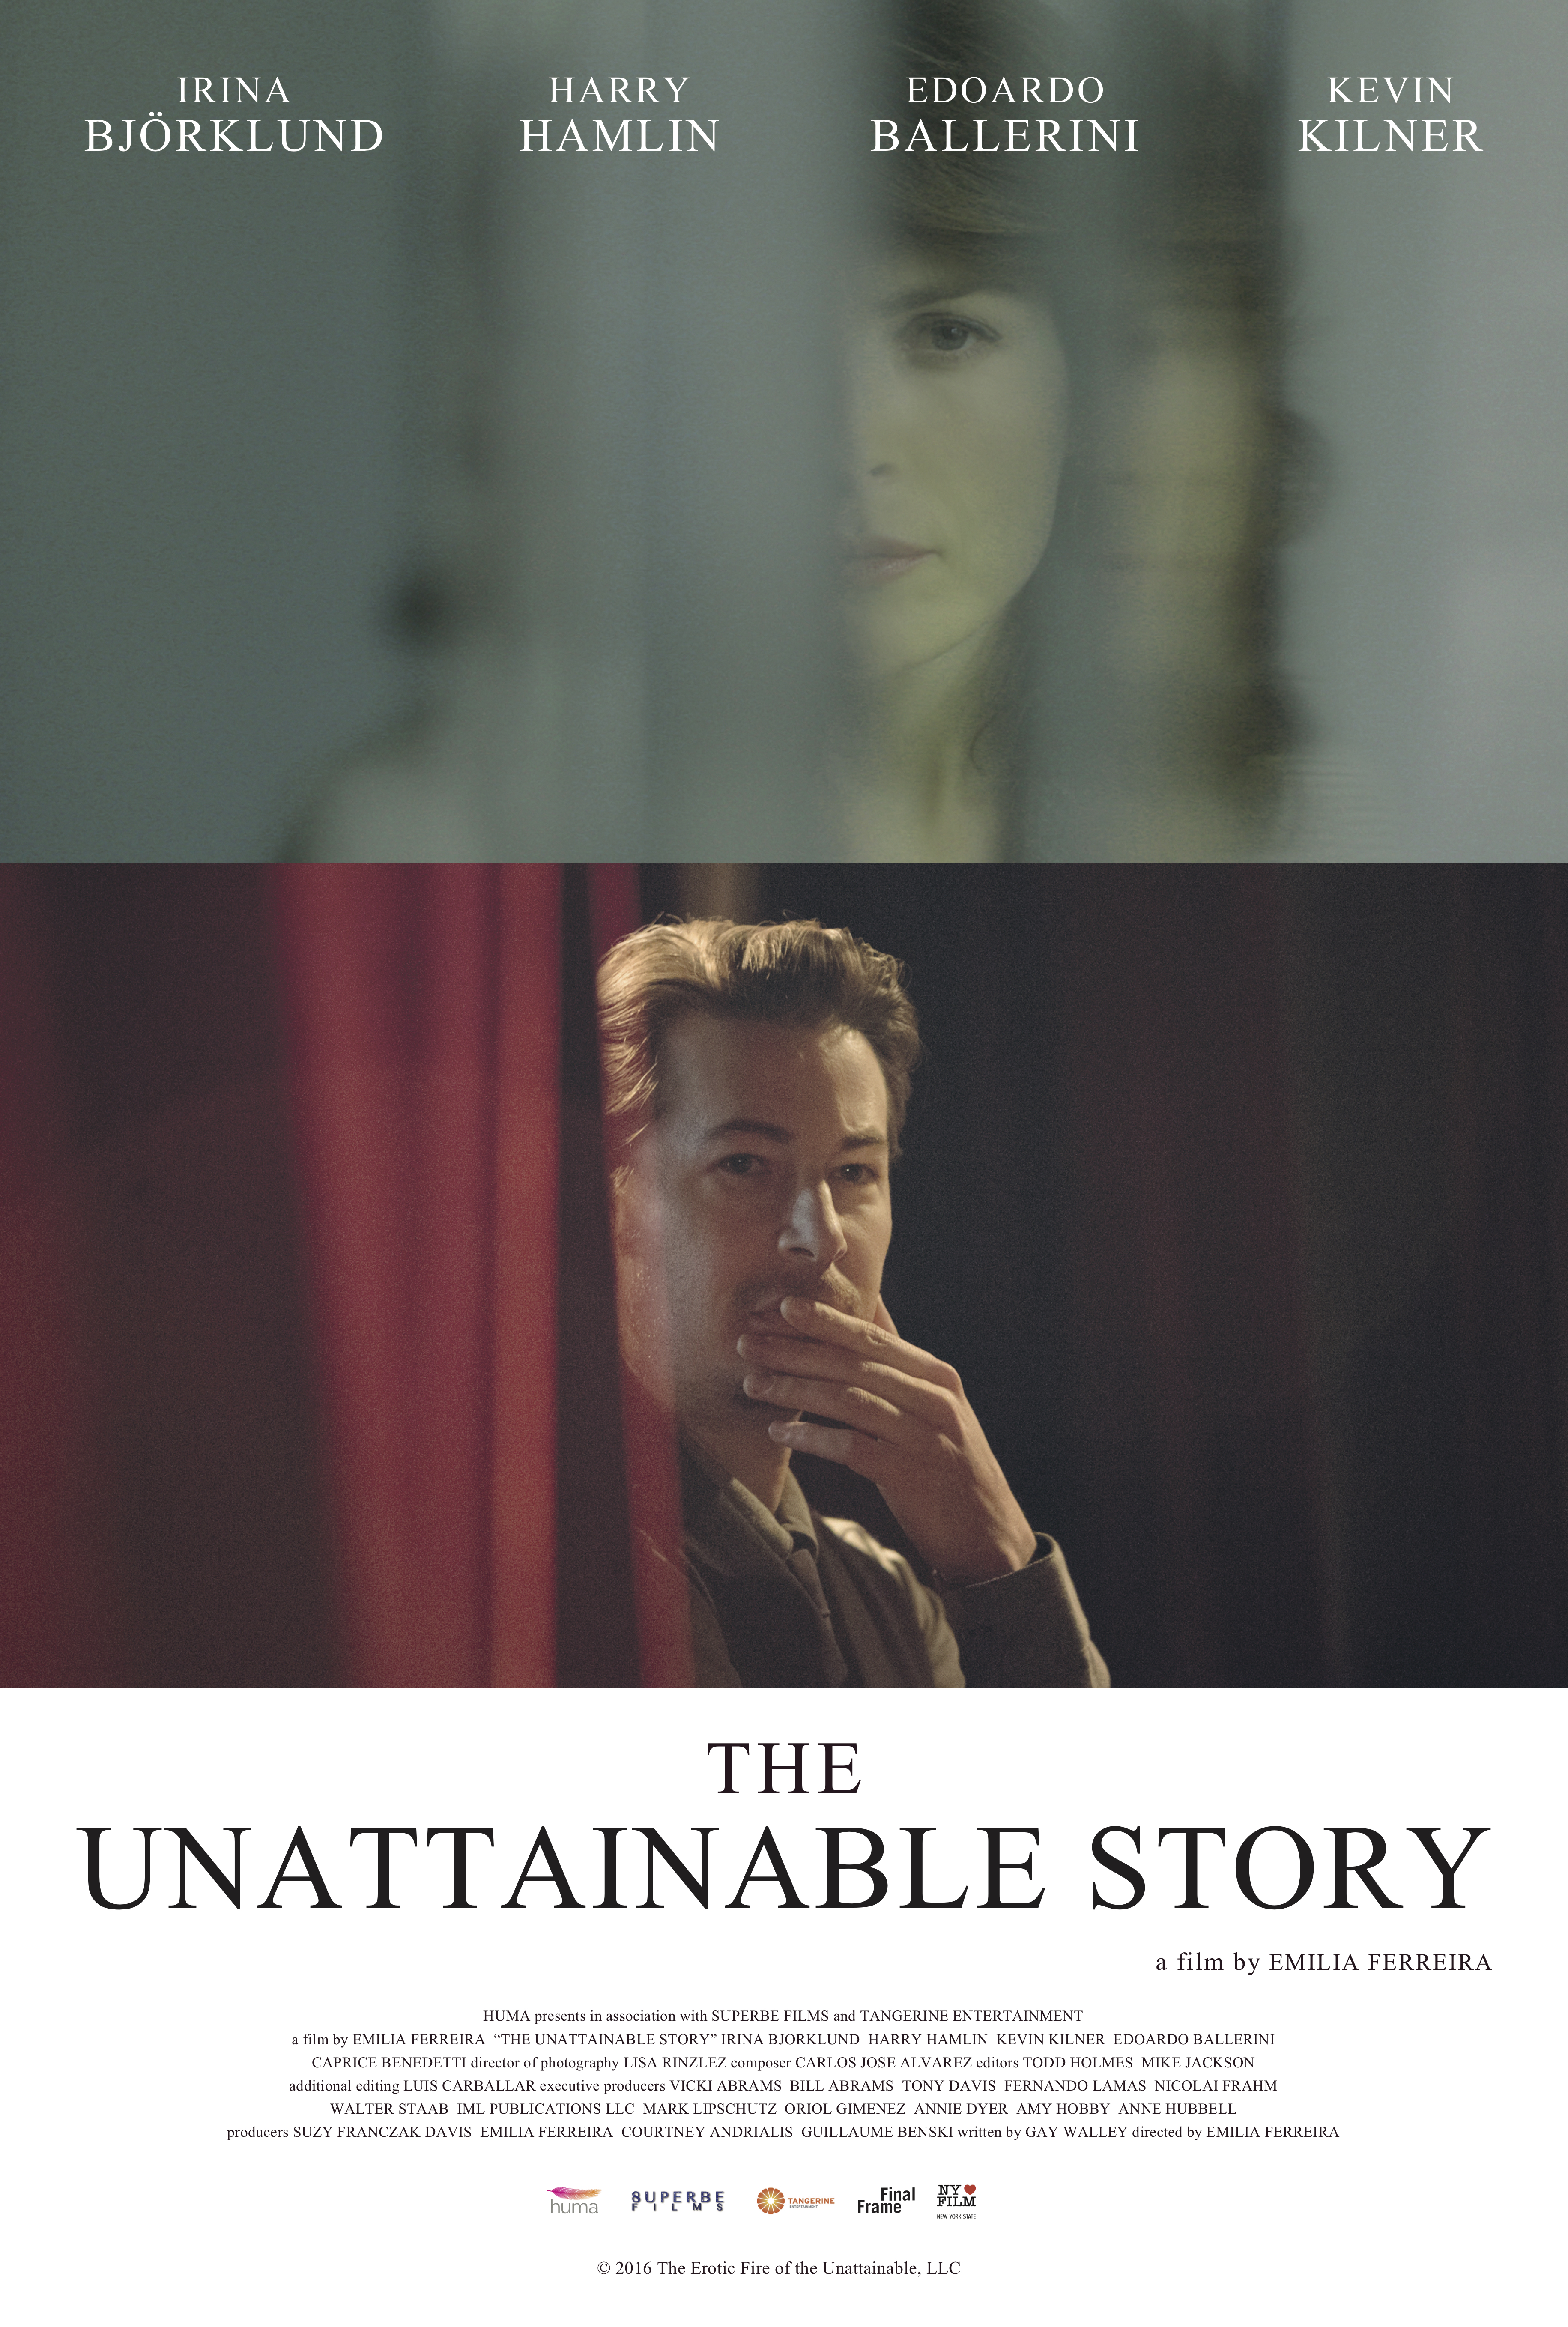 Nonton film The Unattainable Story layarkaca21 indoxx1 ganool online streaming terbaru